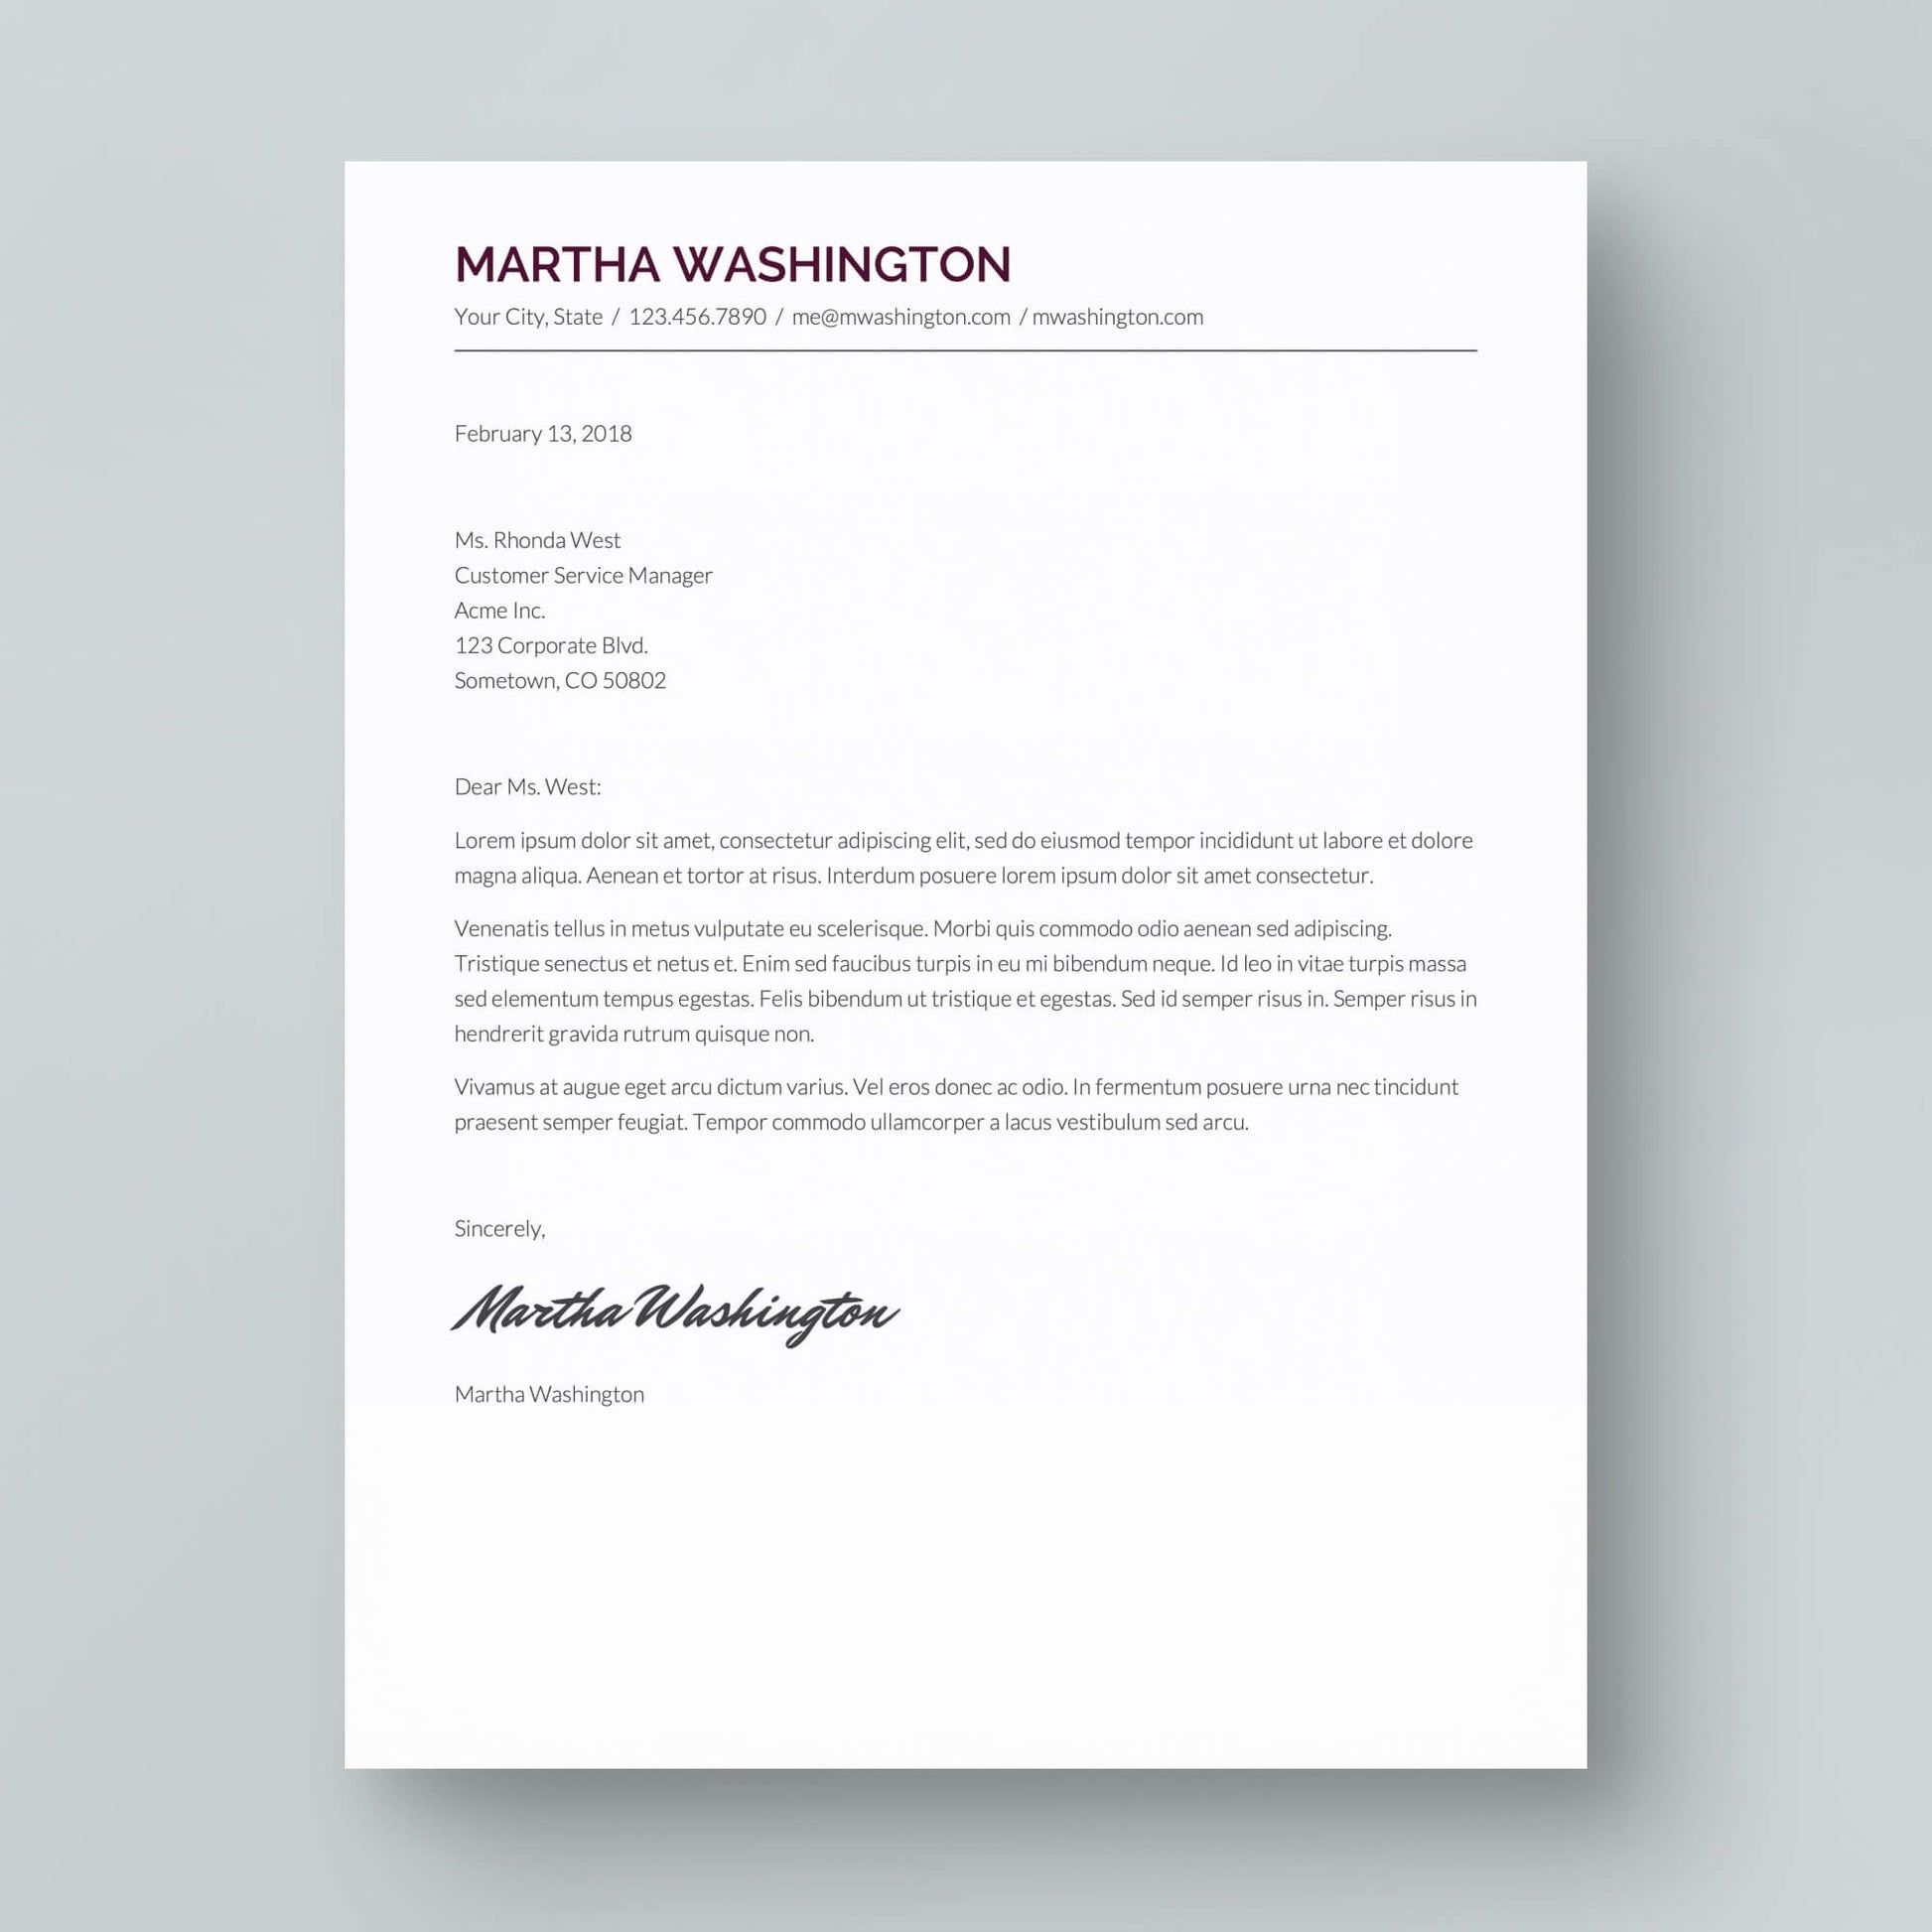 Resume Template: Martha Washington - MioDocs